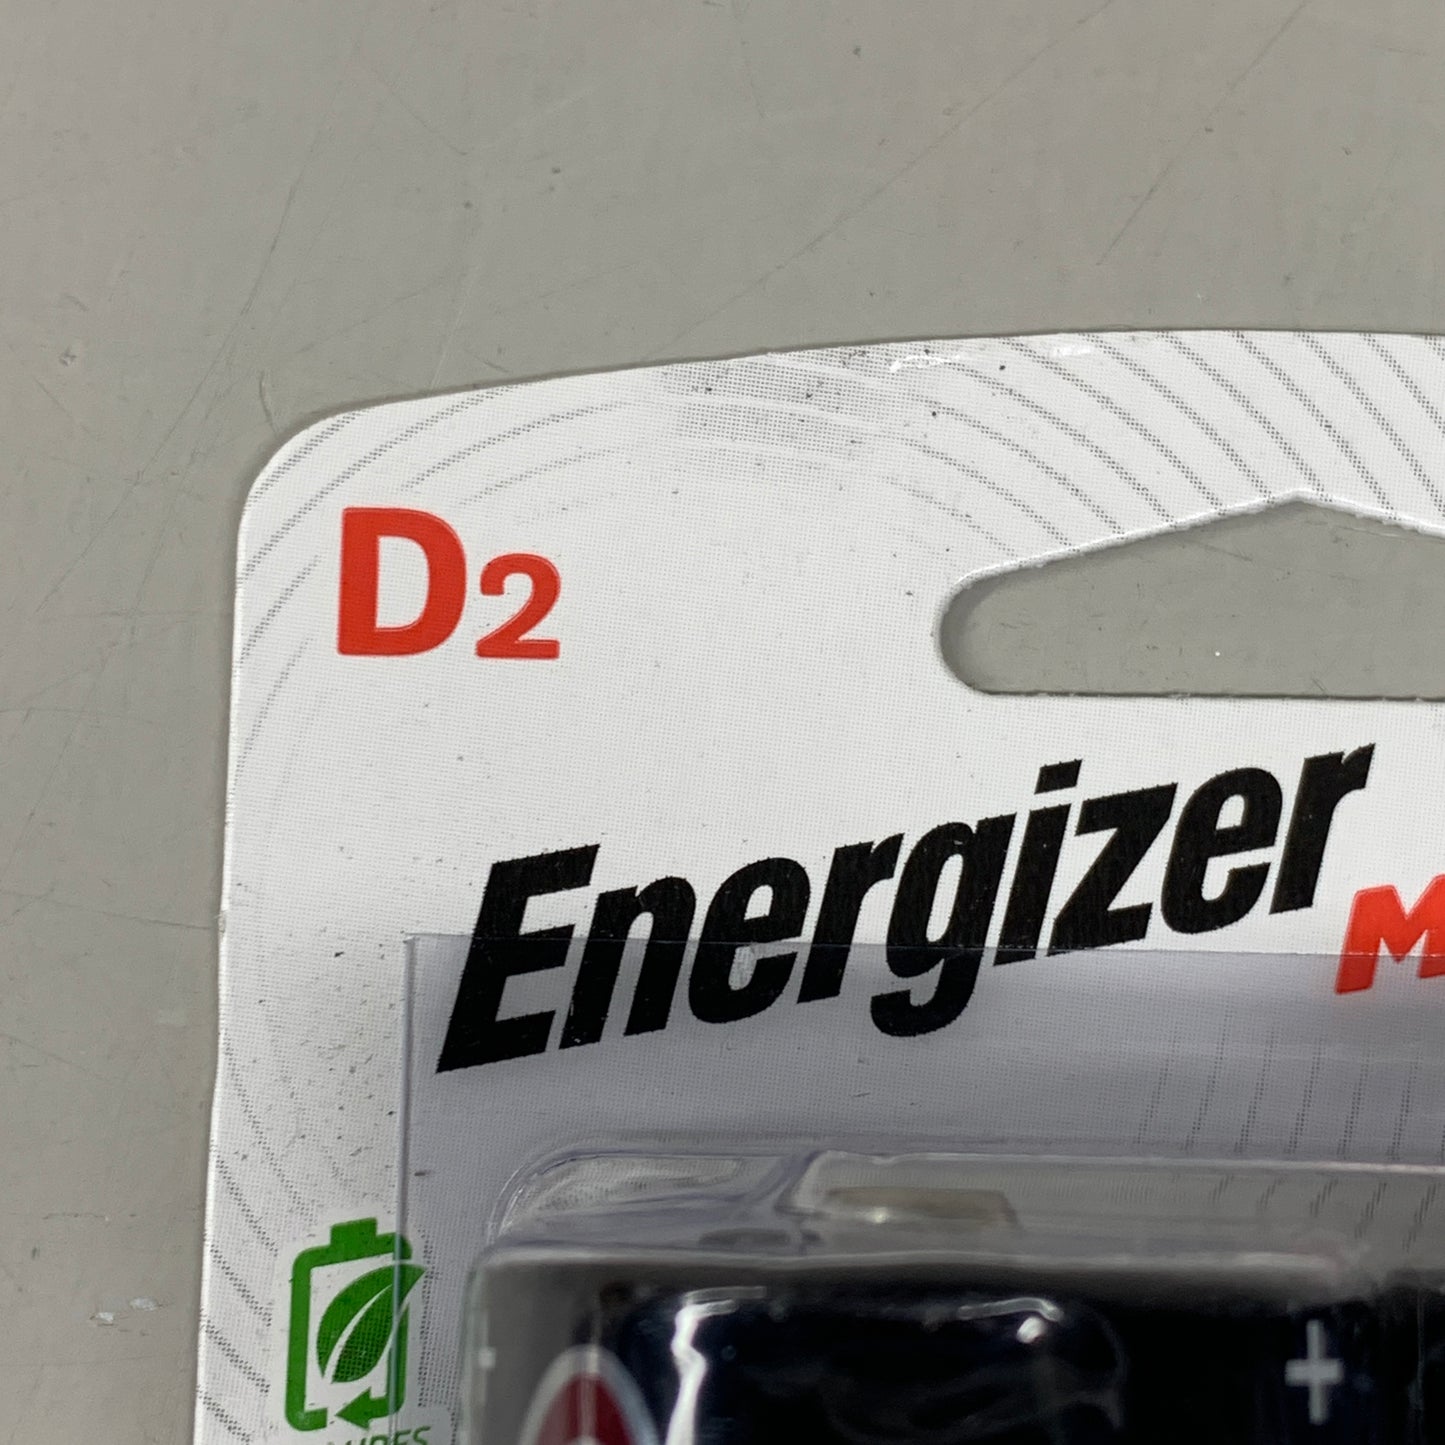 ENERGIZER MAX (6 PACK) D Cell Alkaline Batteries 2 Pack (12 Total) E95BP-2